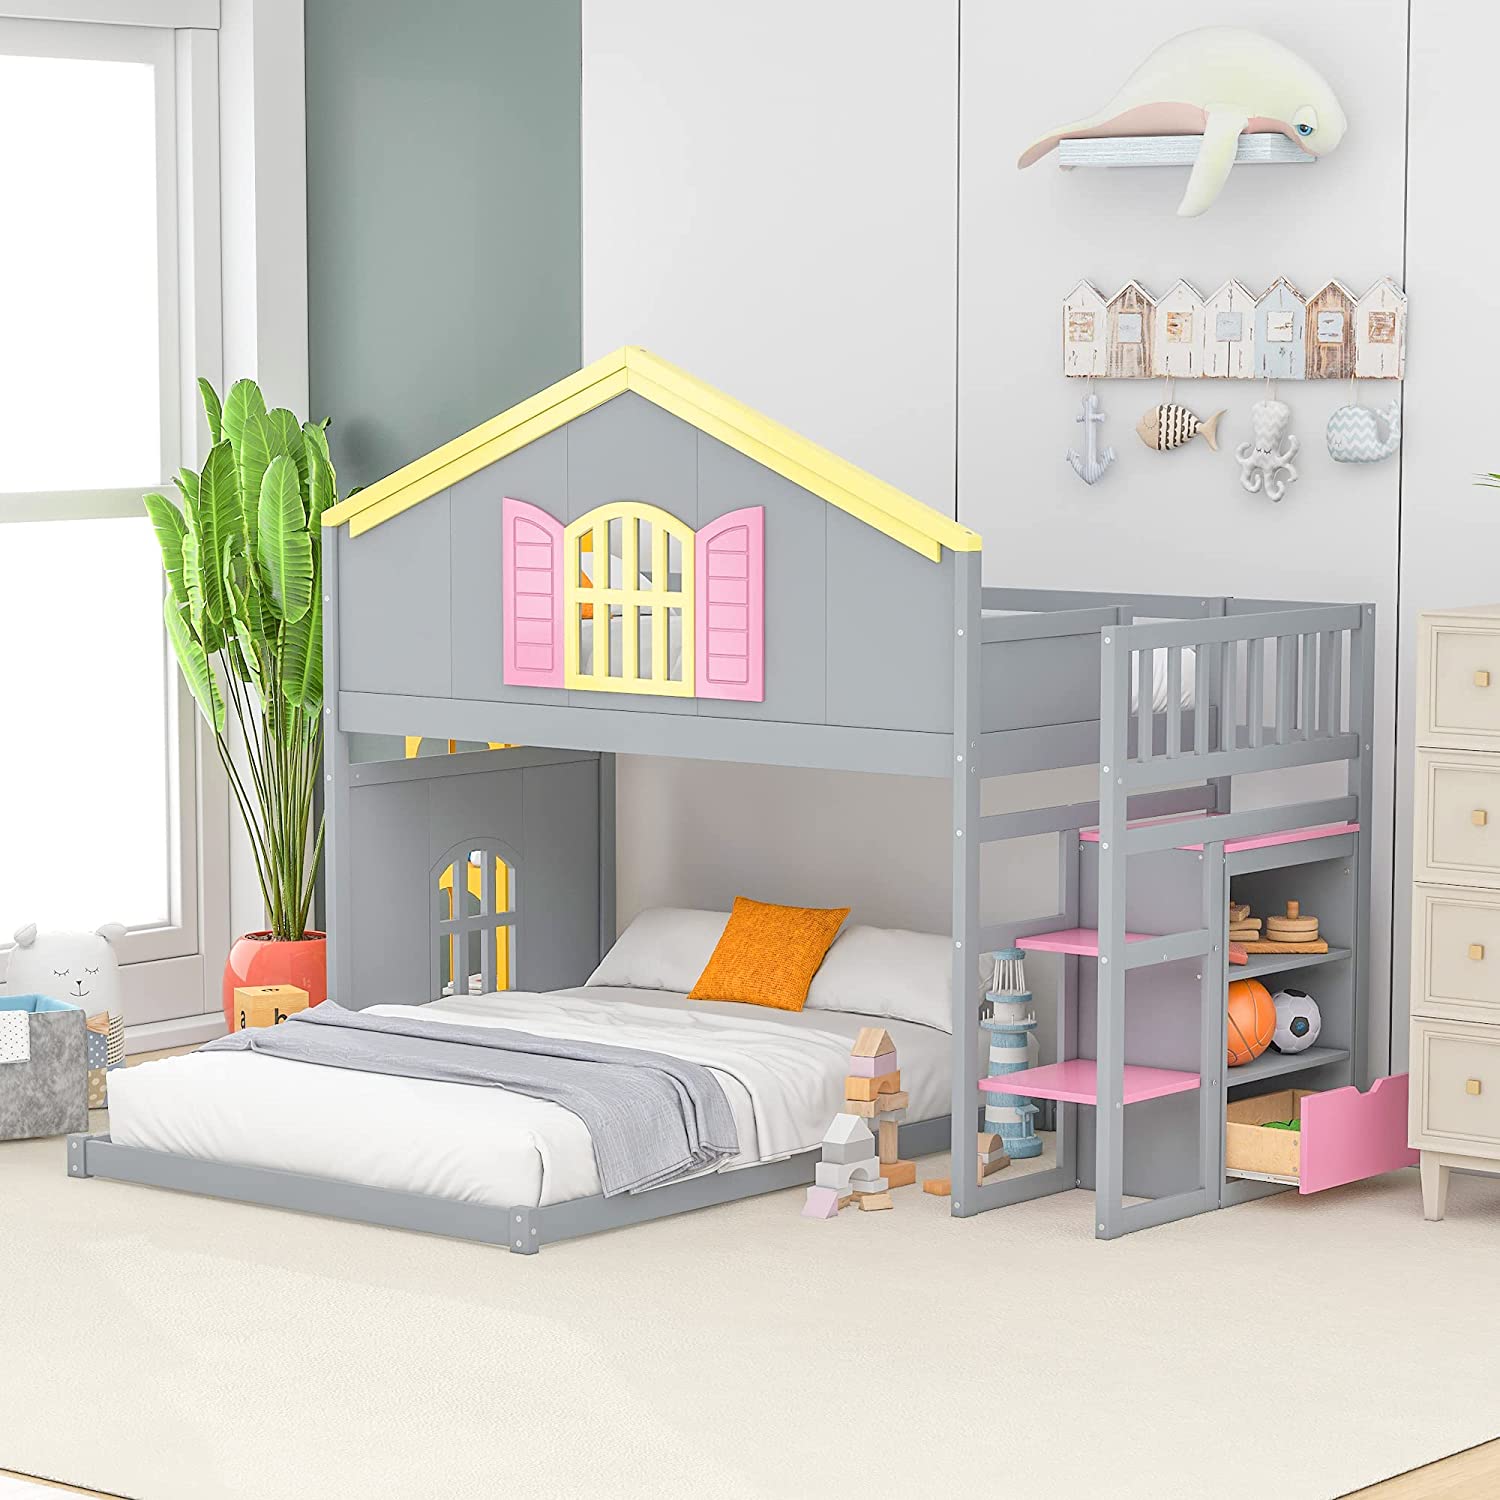 harper and bright floor bed house, best toddler floor bed